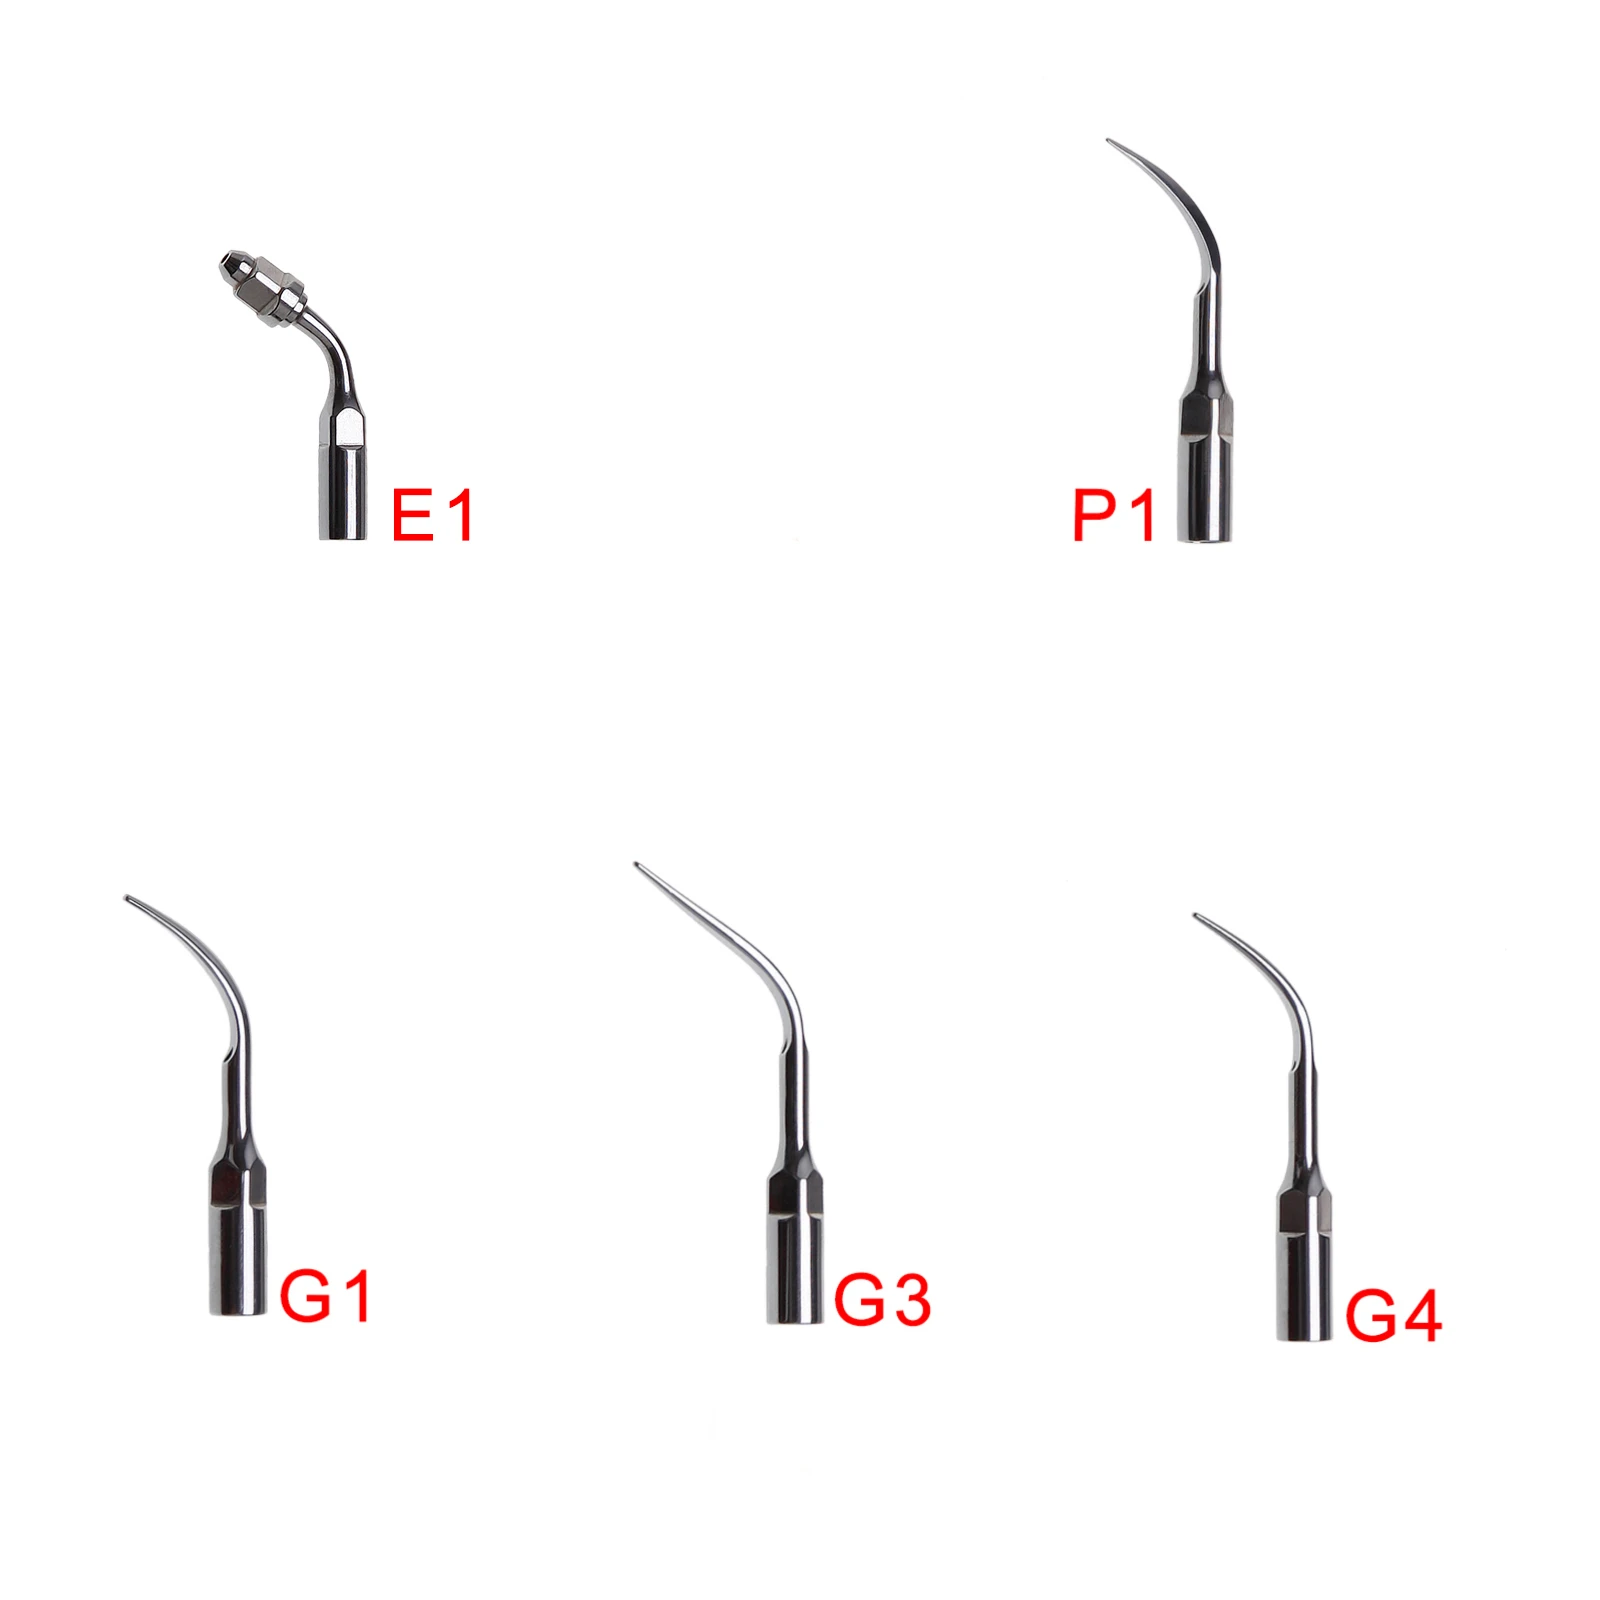 

5-Pcs Dental Ultrasonic Scaler Tips fit Satalec/DTE Handpiece 5 Type (PD1+ED1+GD1+GD3+GD4)